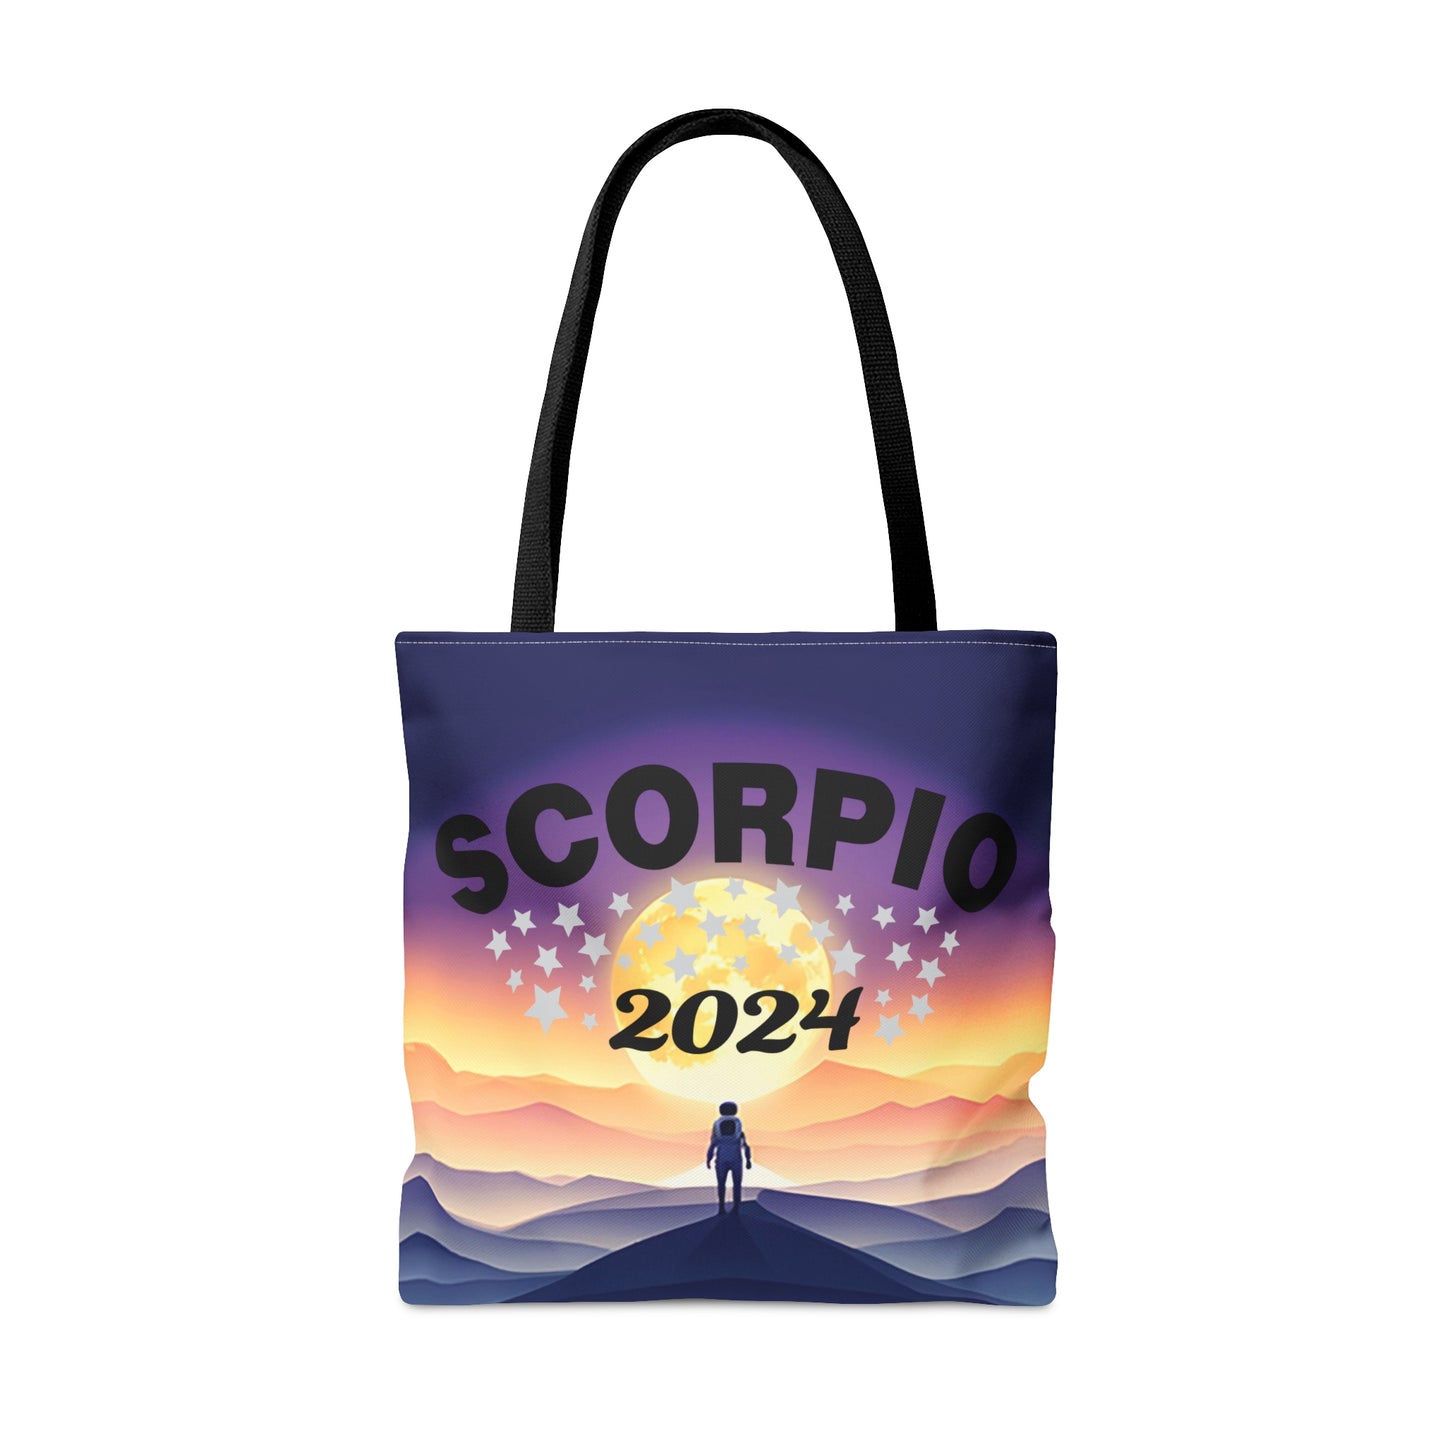 Scorpio 2024 Tote Bag